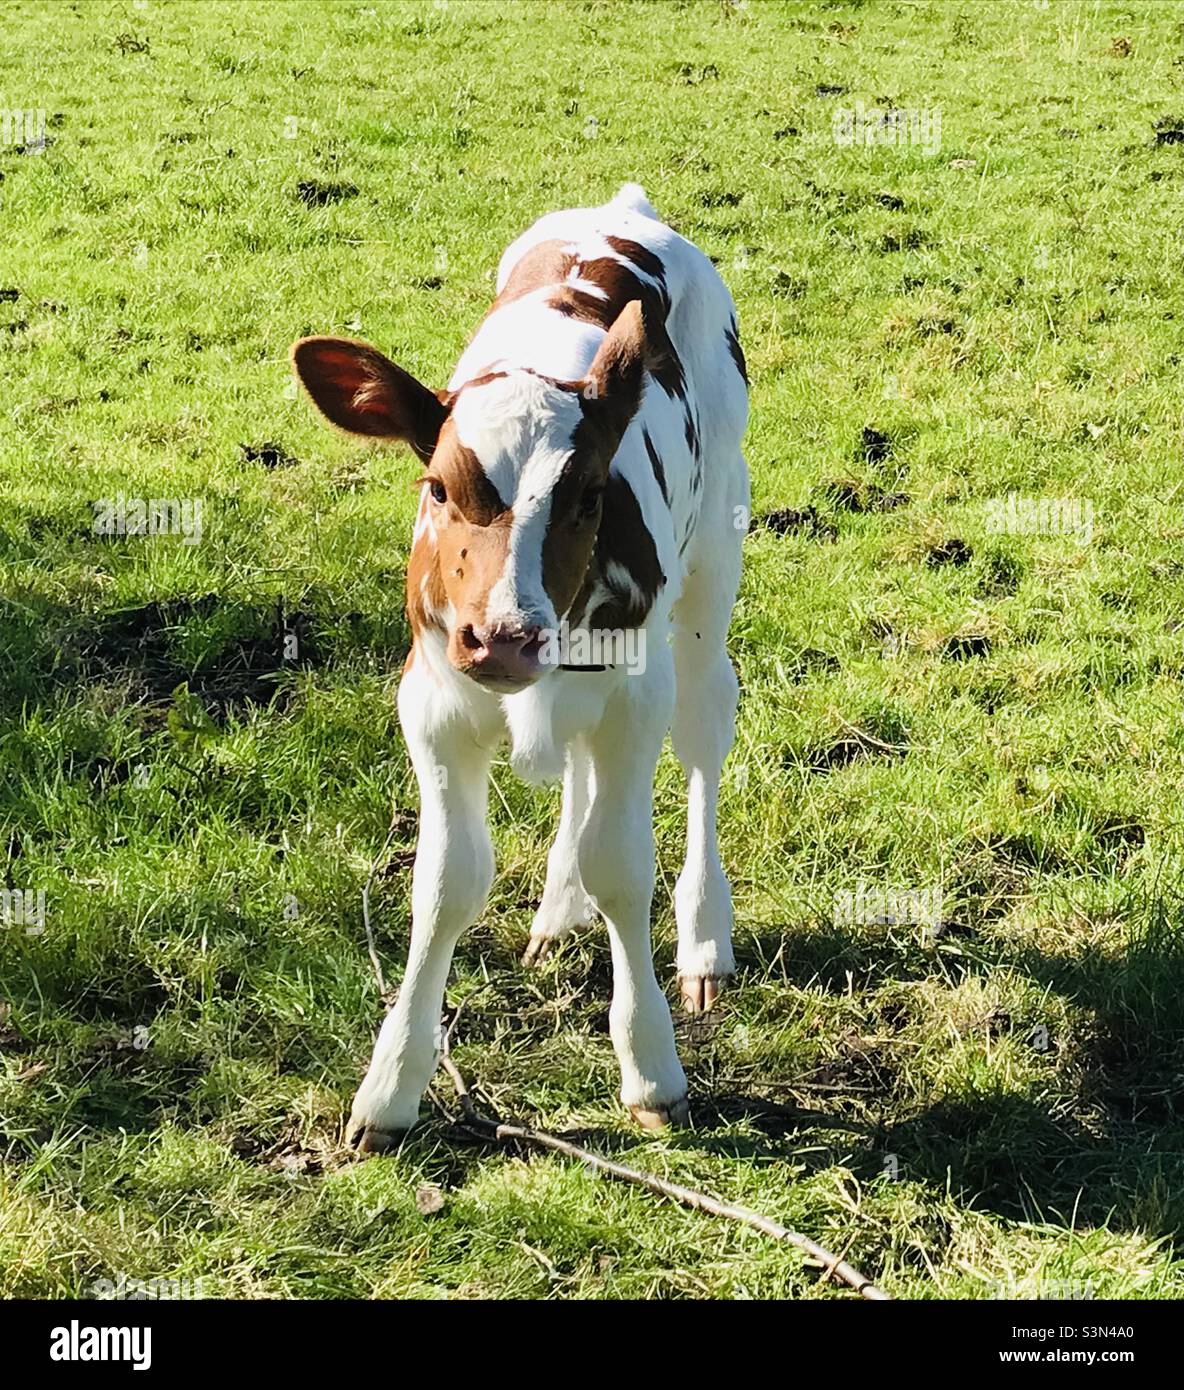 Cute calf looking at camera Stock Photo